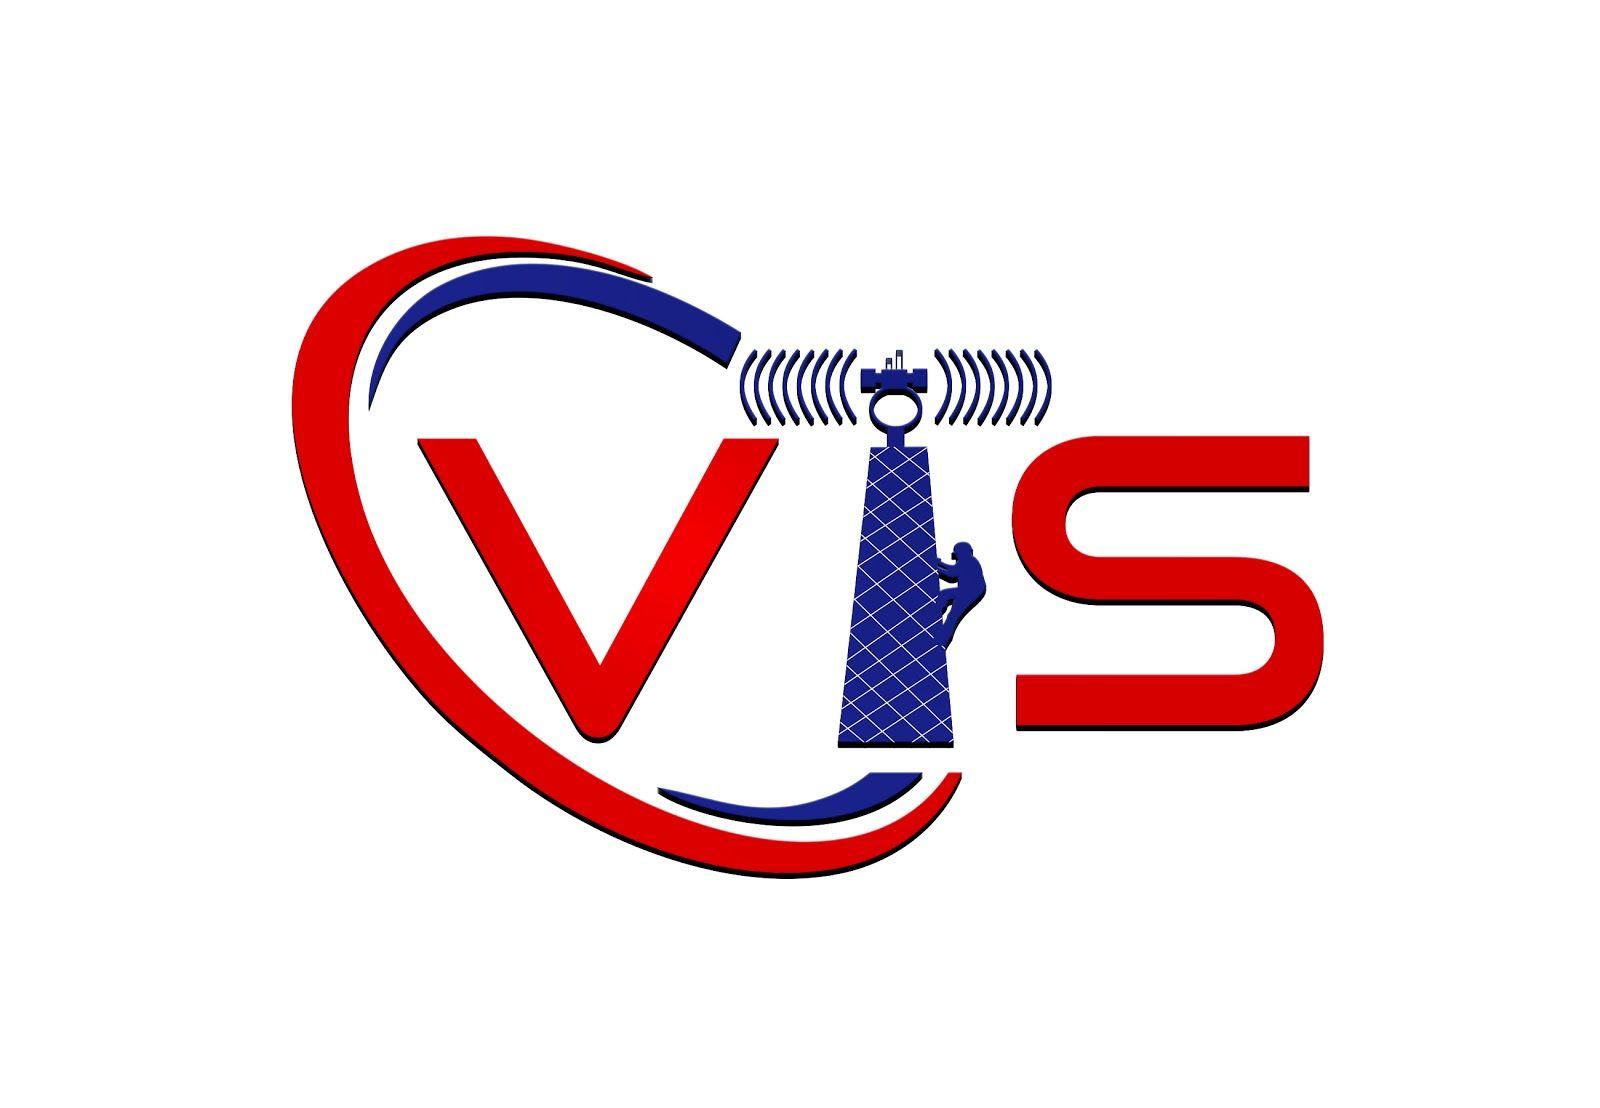 VTS Logo - VTS Logo Design